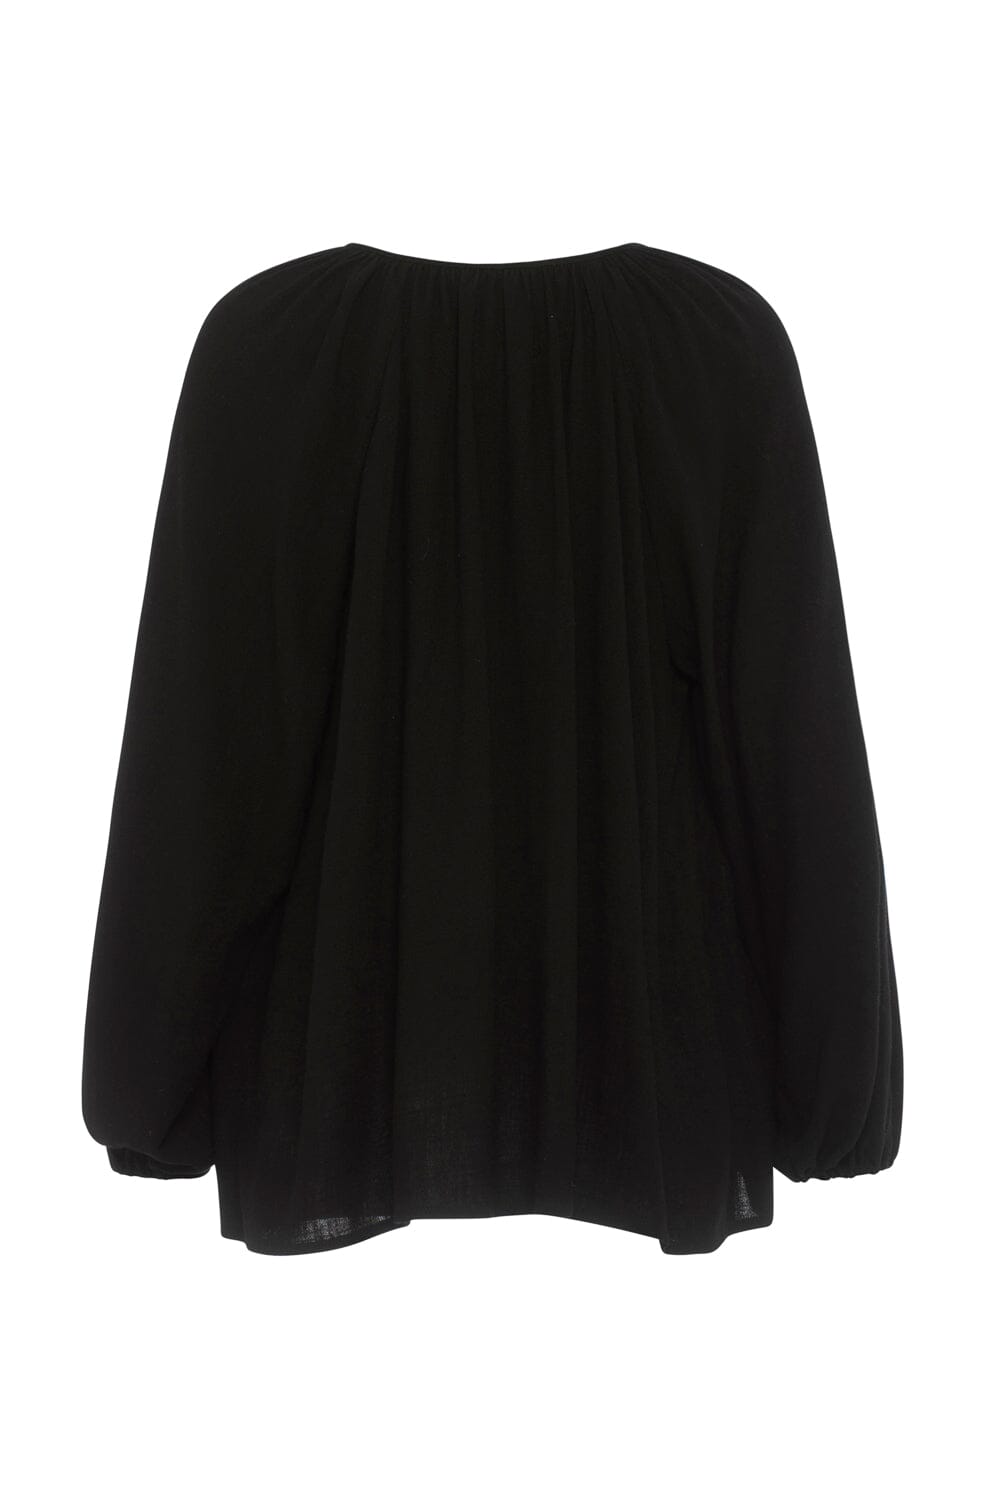 ArnieSays: Daphne Linen Light Black Bluse